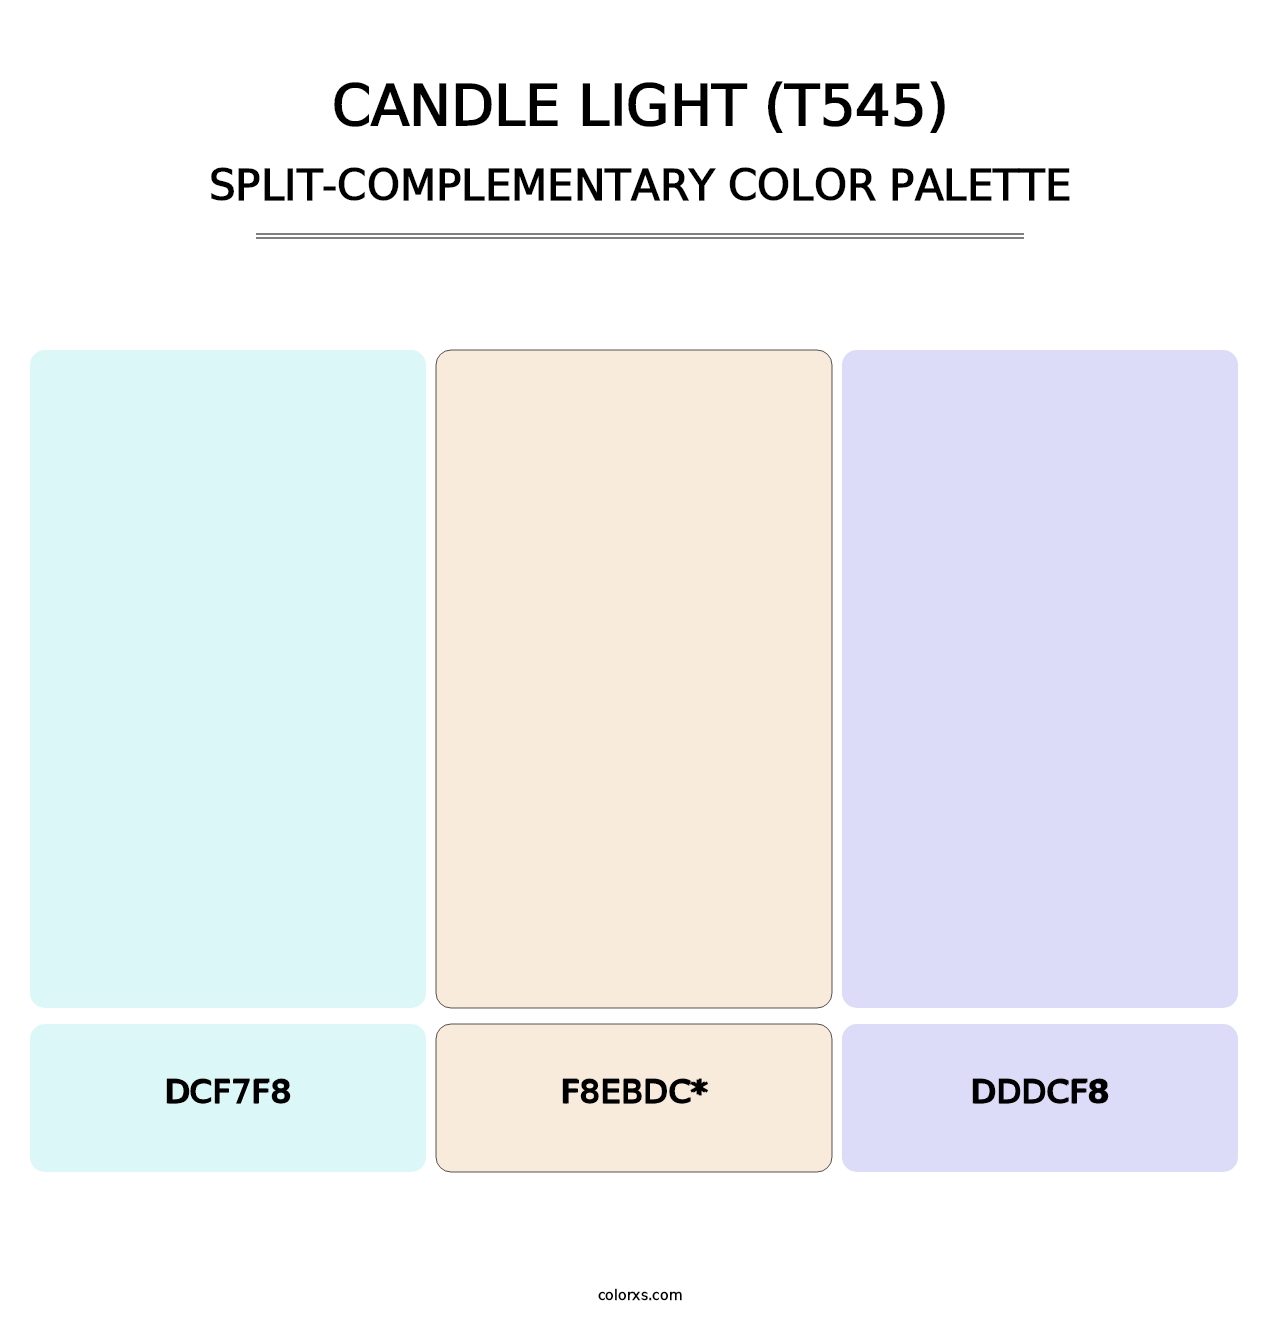 Candle Light (T545) - Split-Complementary Color Palette